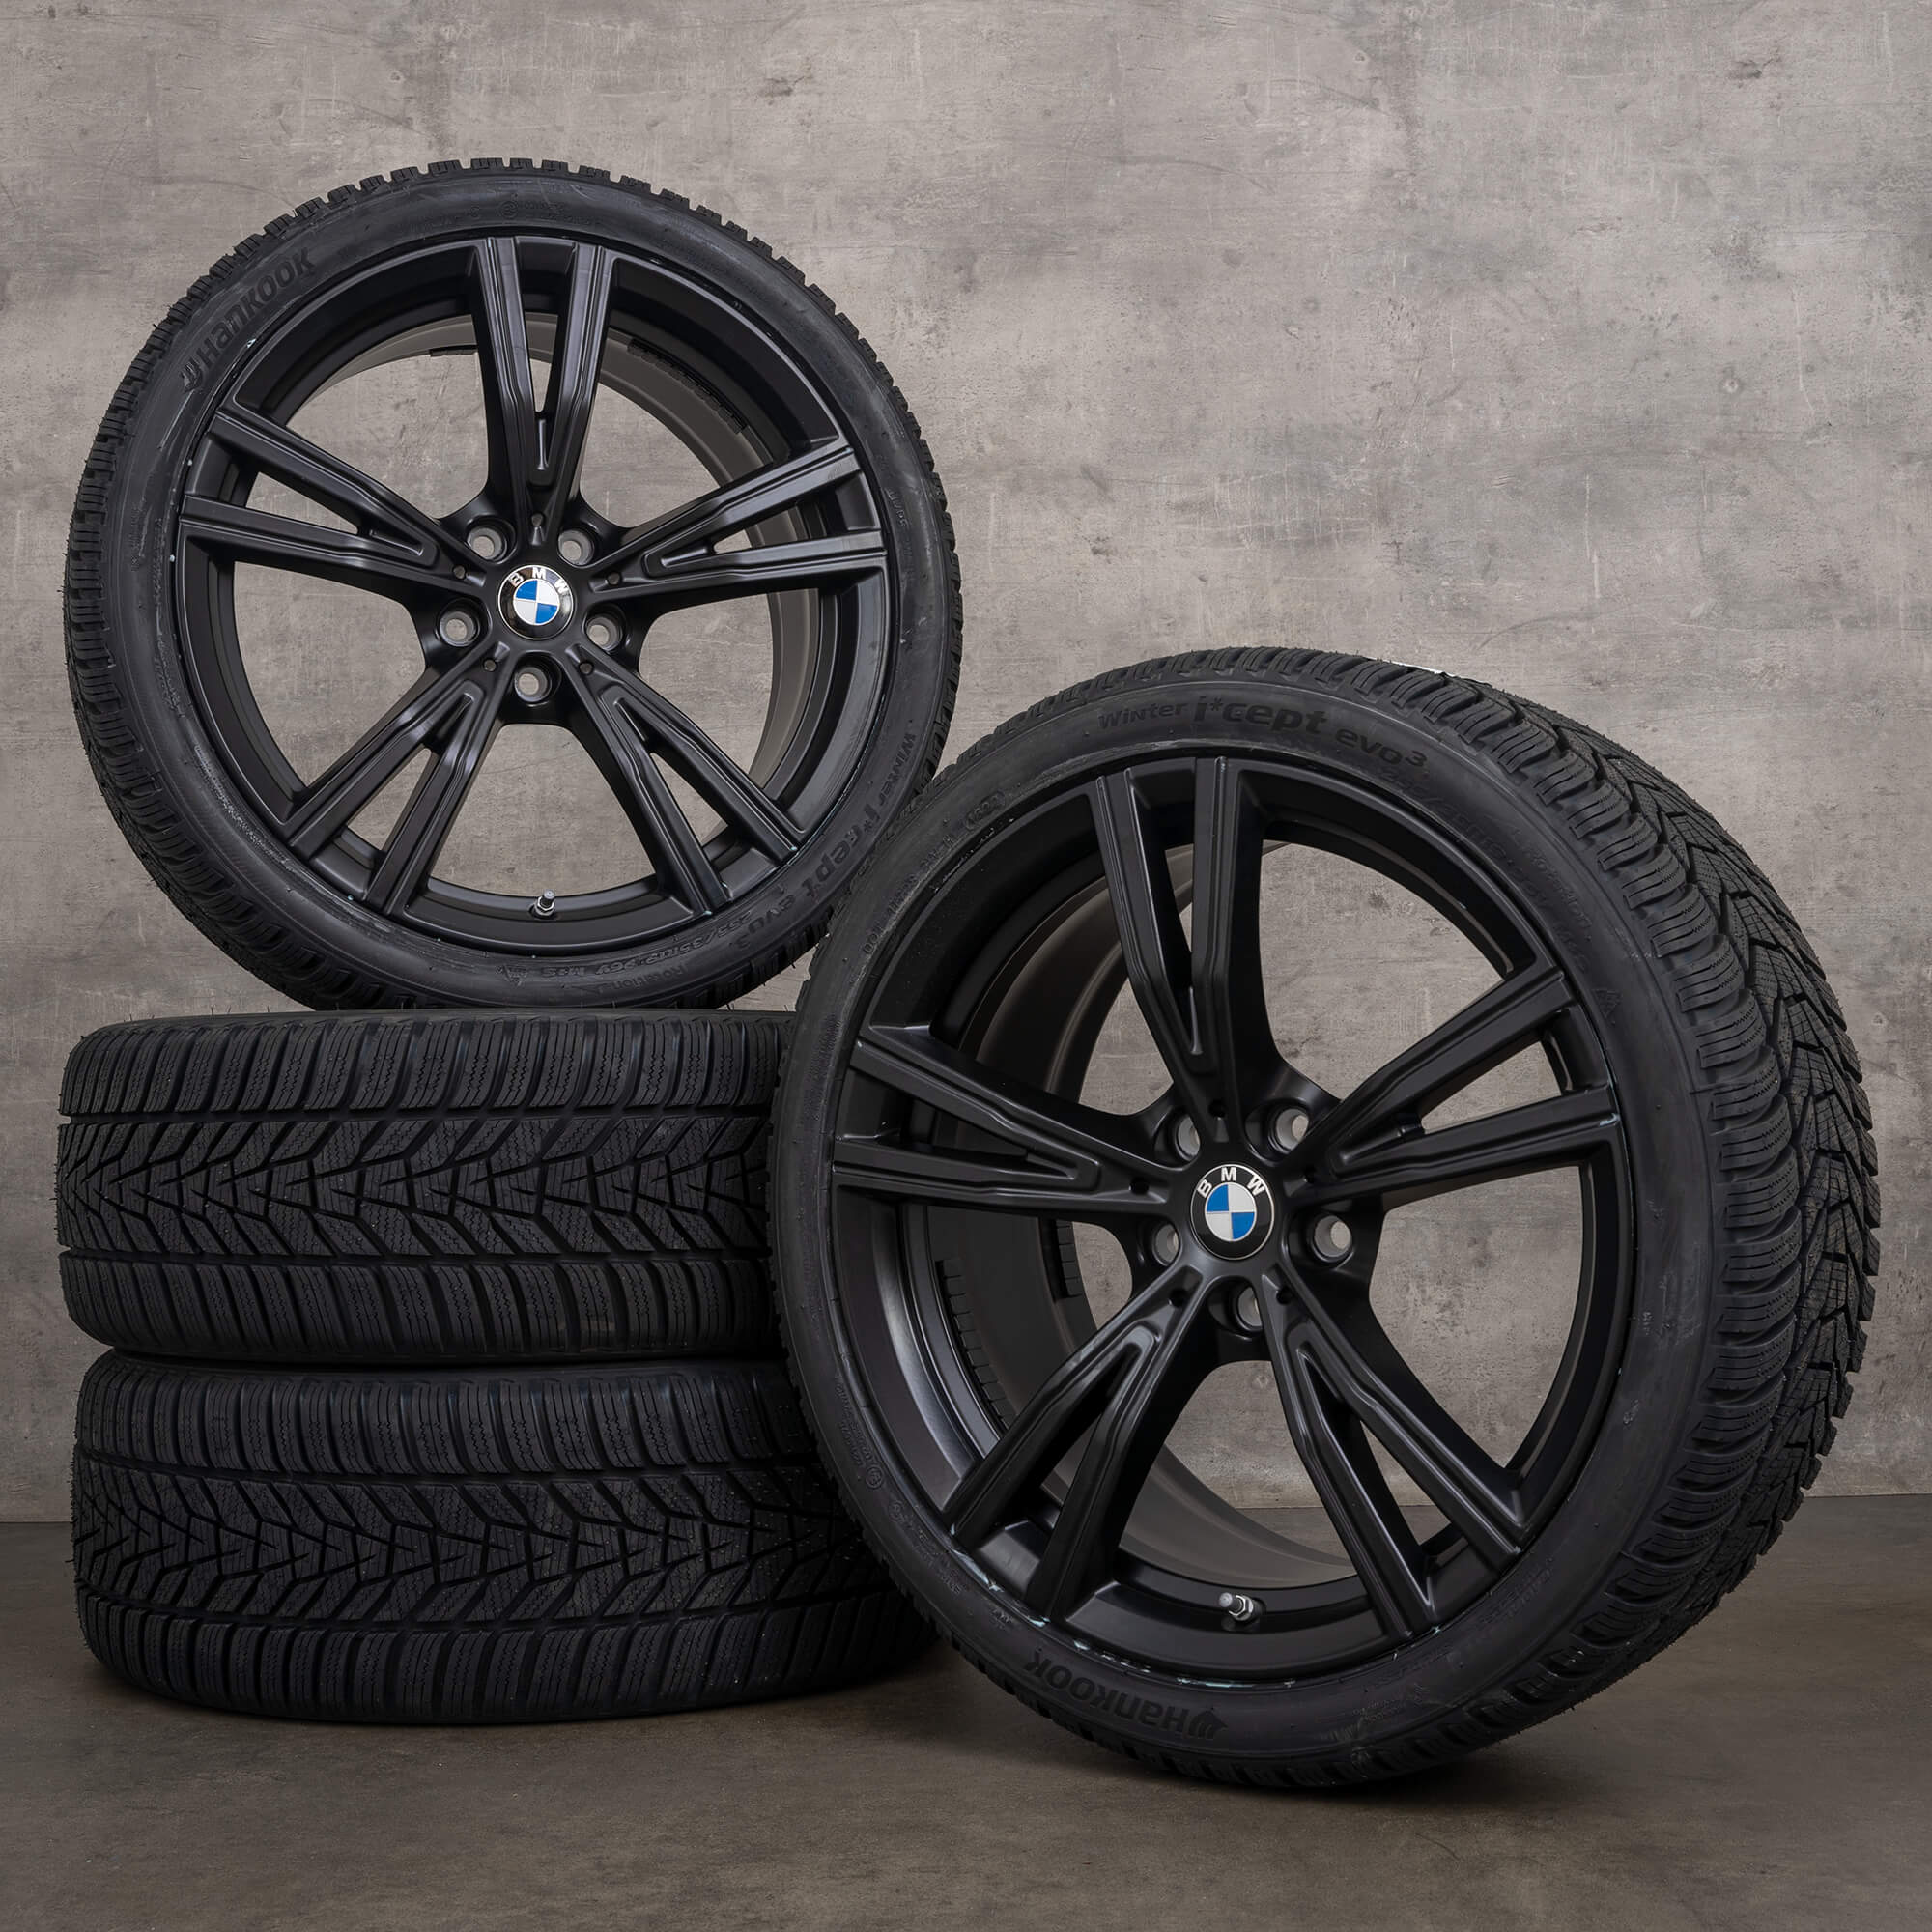 BMW 3 Series G20 G21 4 G22 G23 winter tires wheels 19 inch rims styling 793i